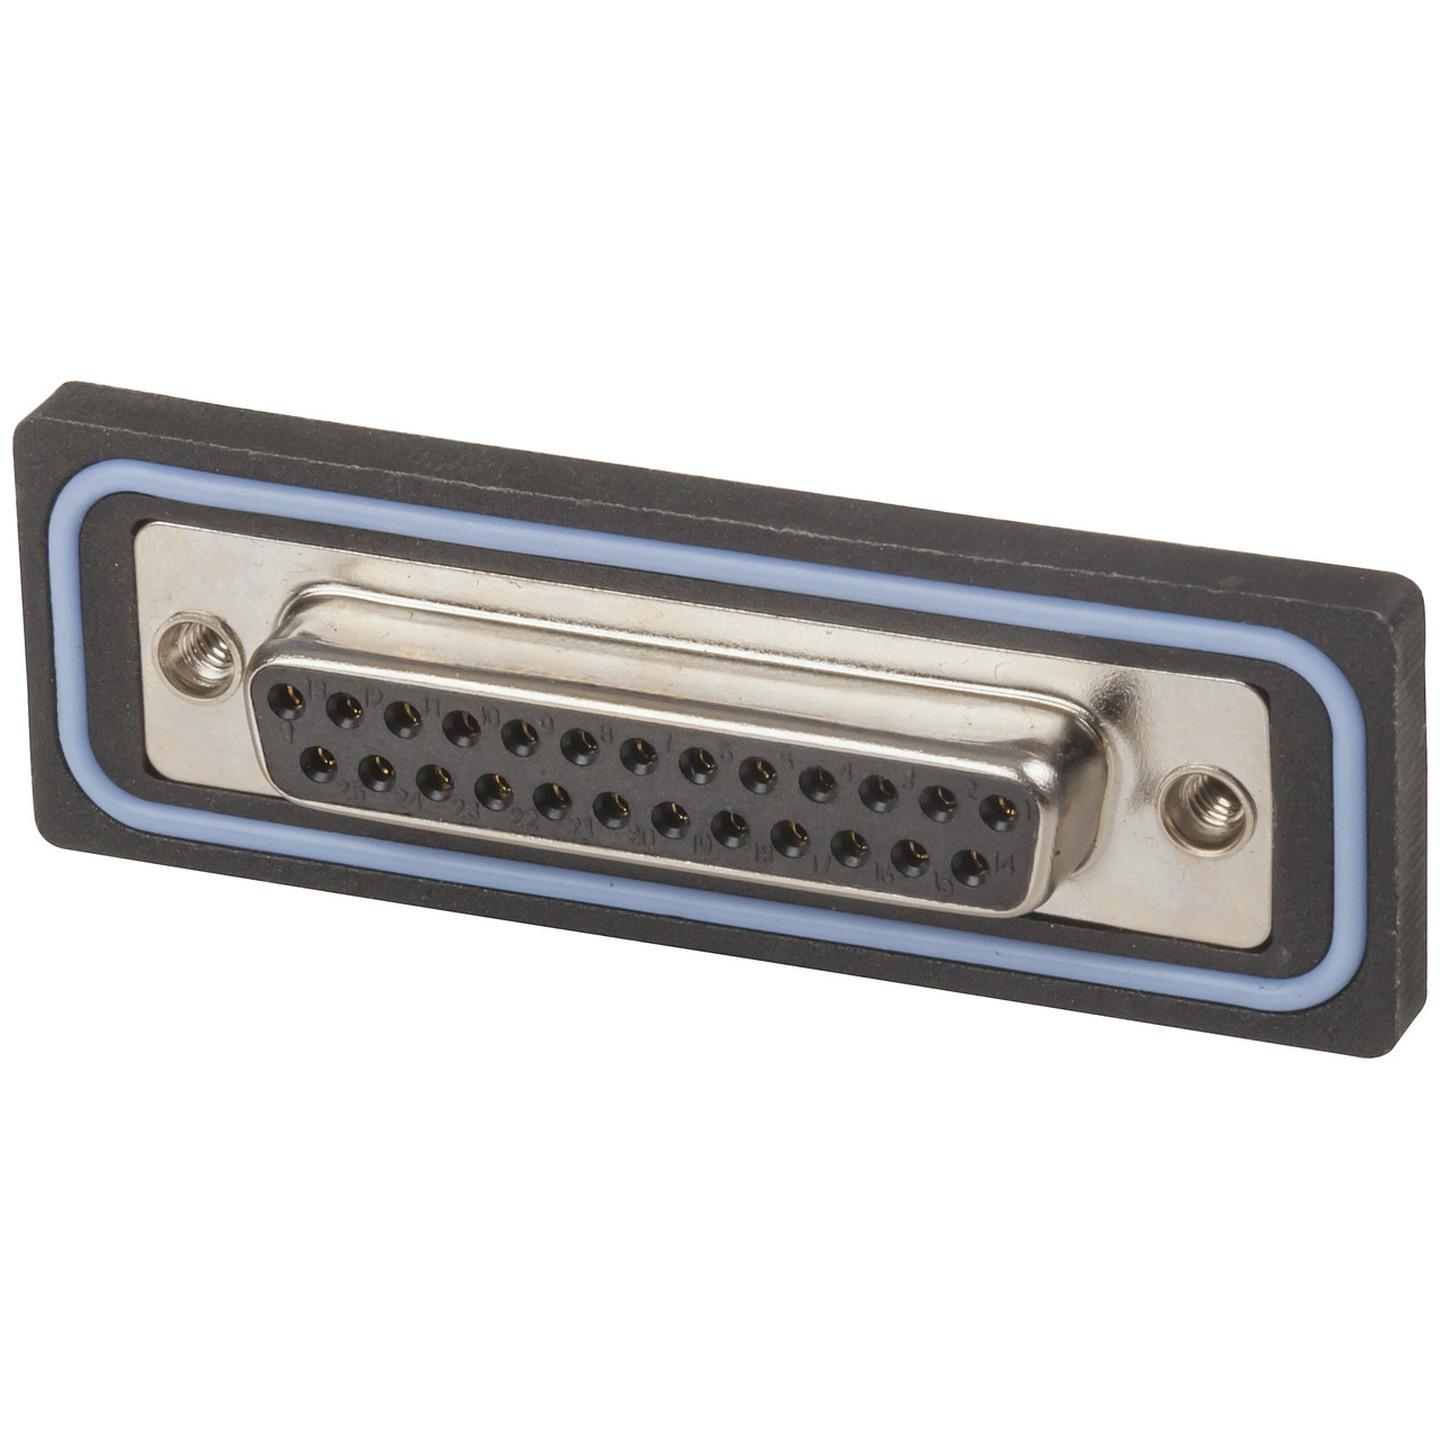 25 Pin IP67 D-Sub Socket Connector